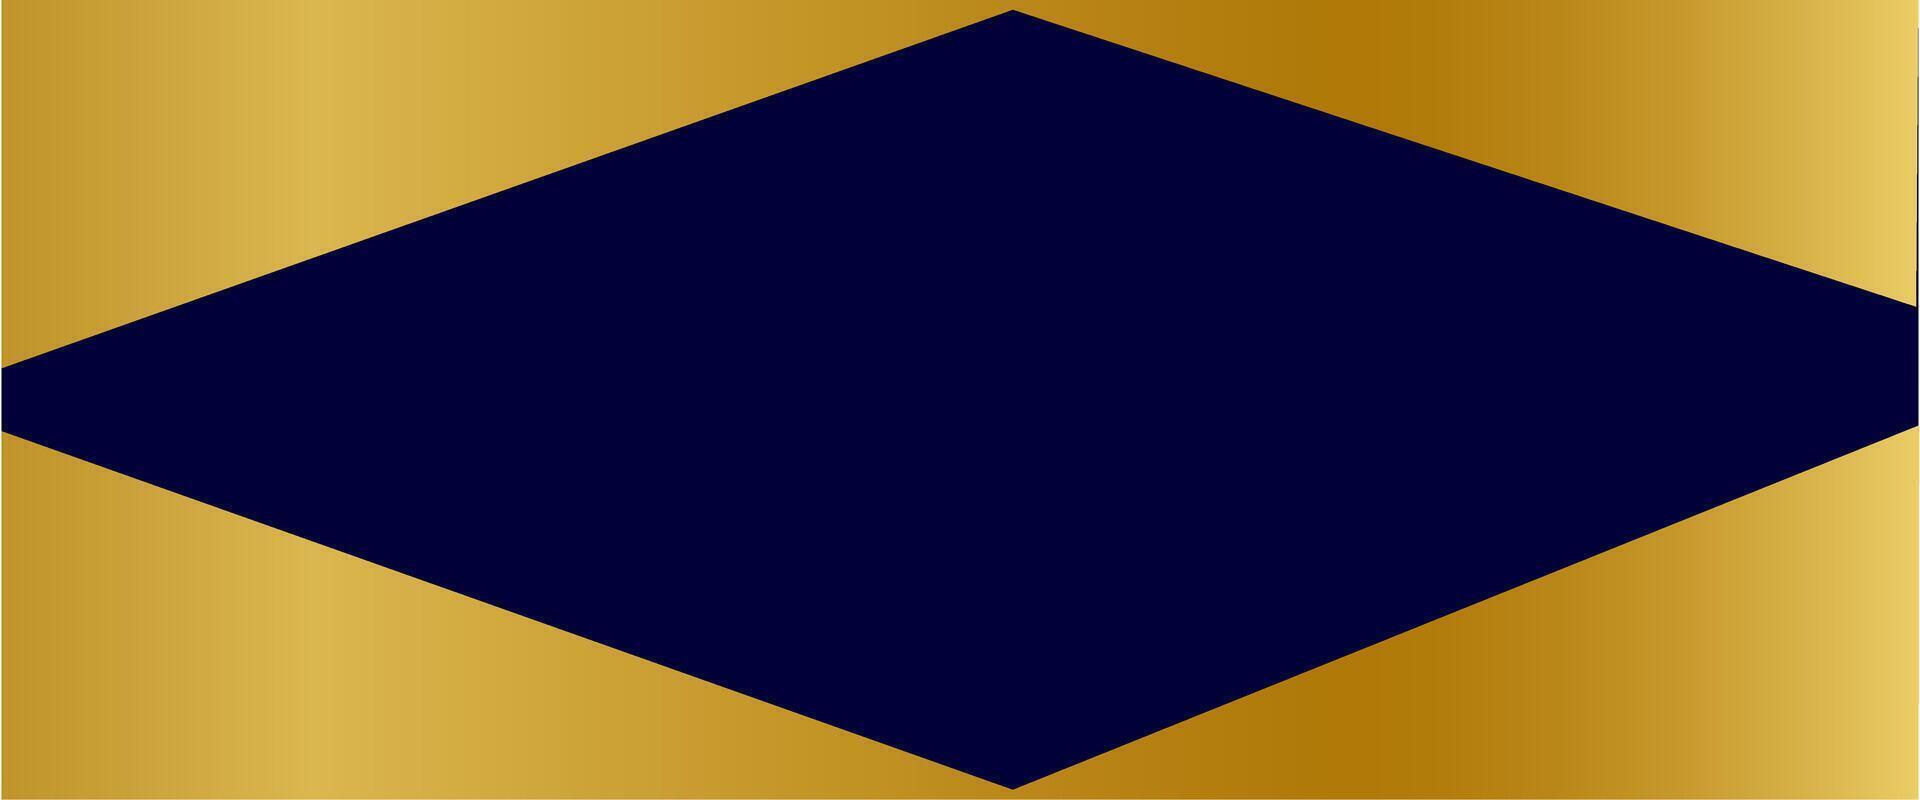 abstrato elegante Sombrio azul fundo com dourado forma vetor